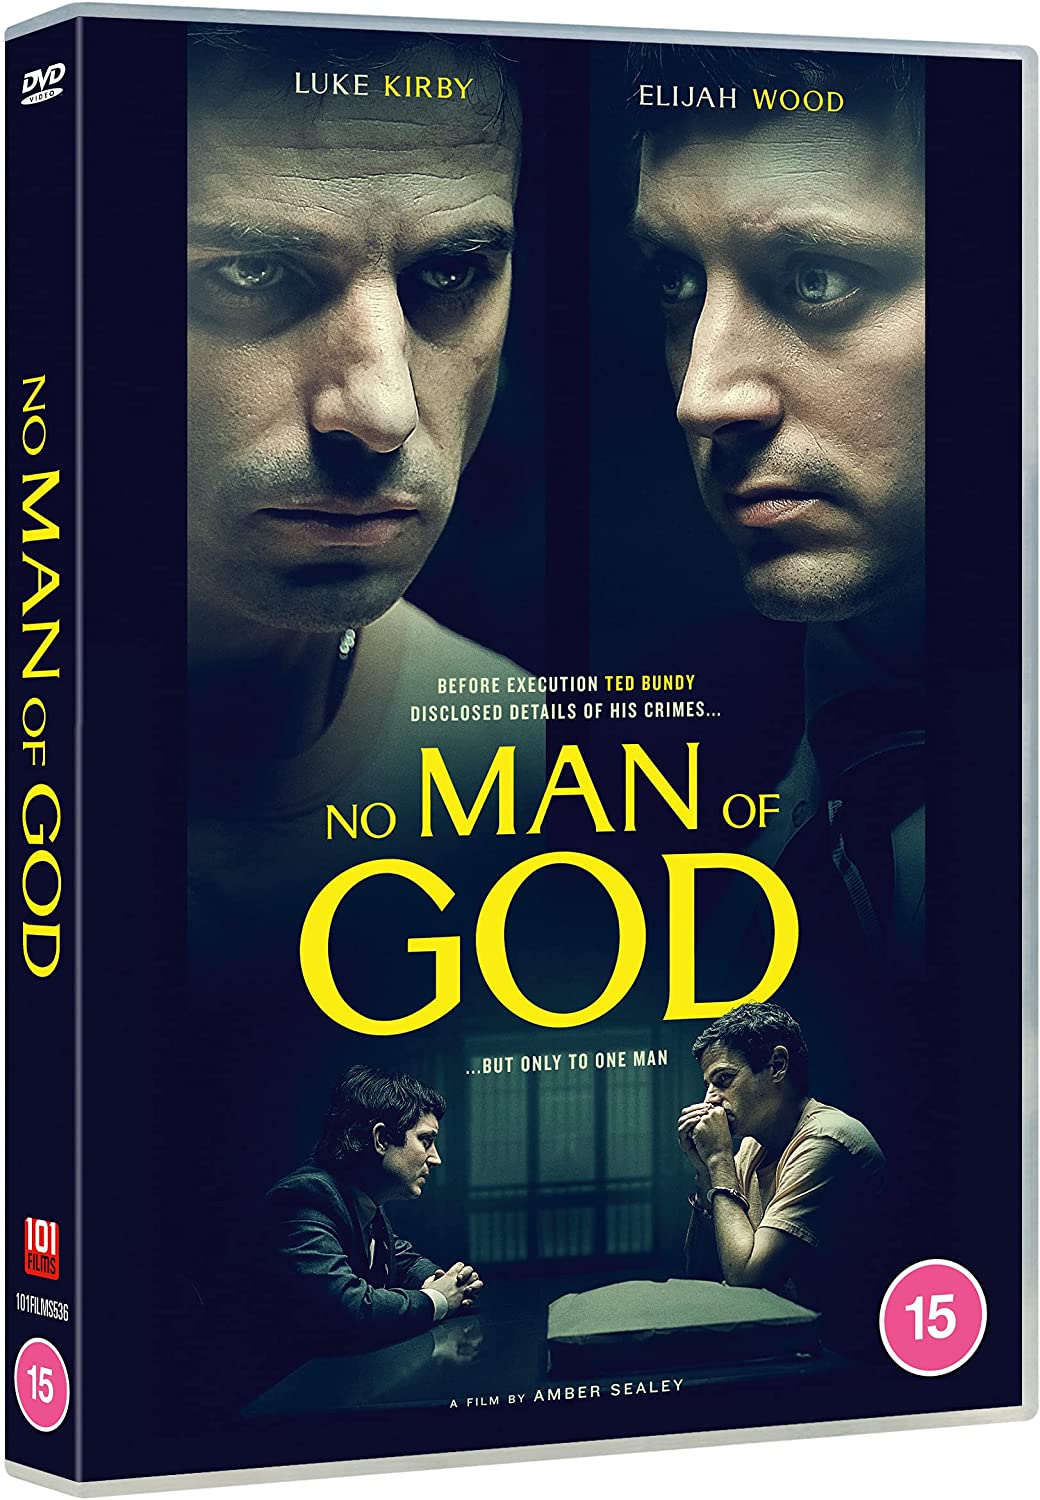 No Man of God - Crime/Mystery [DVD]